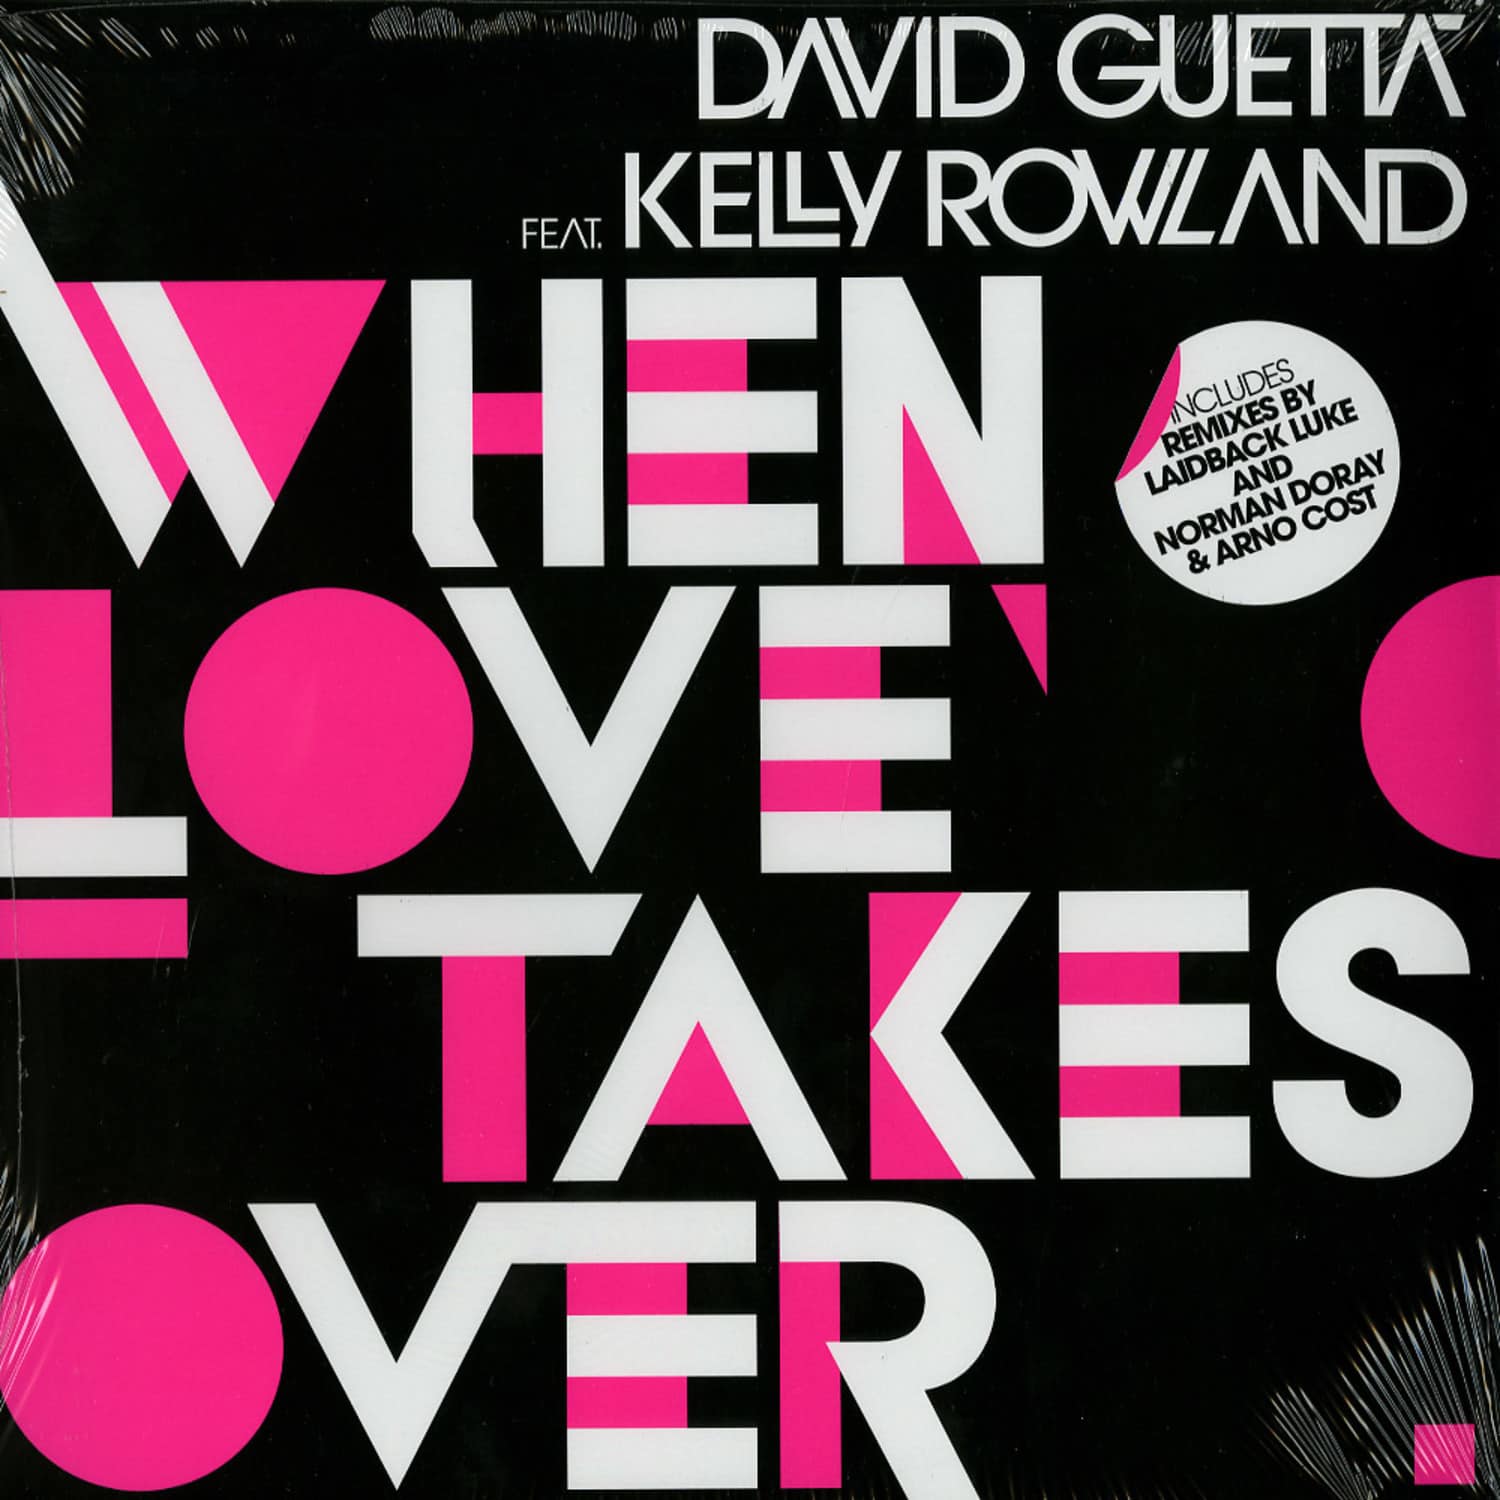 Take me love 5. When Love takes over Келли Роуленд. David Guetta feat. Kelly Rowland - when Love takes over. David Guetta Love. David Guetta виниловая пластинка.